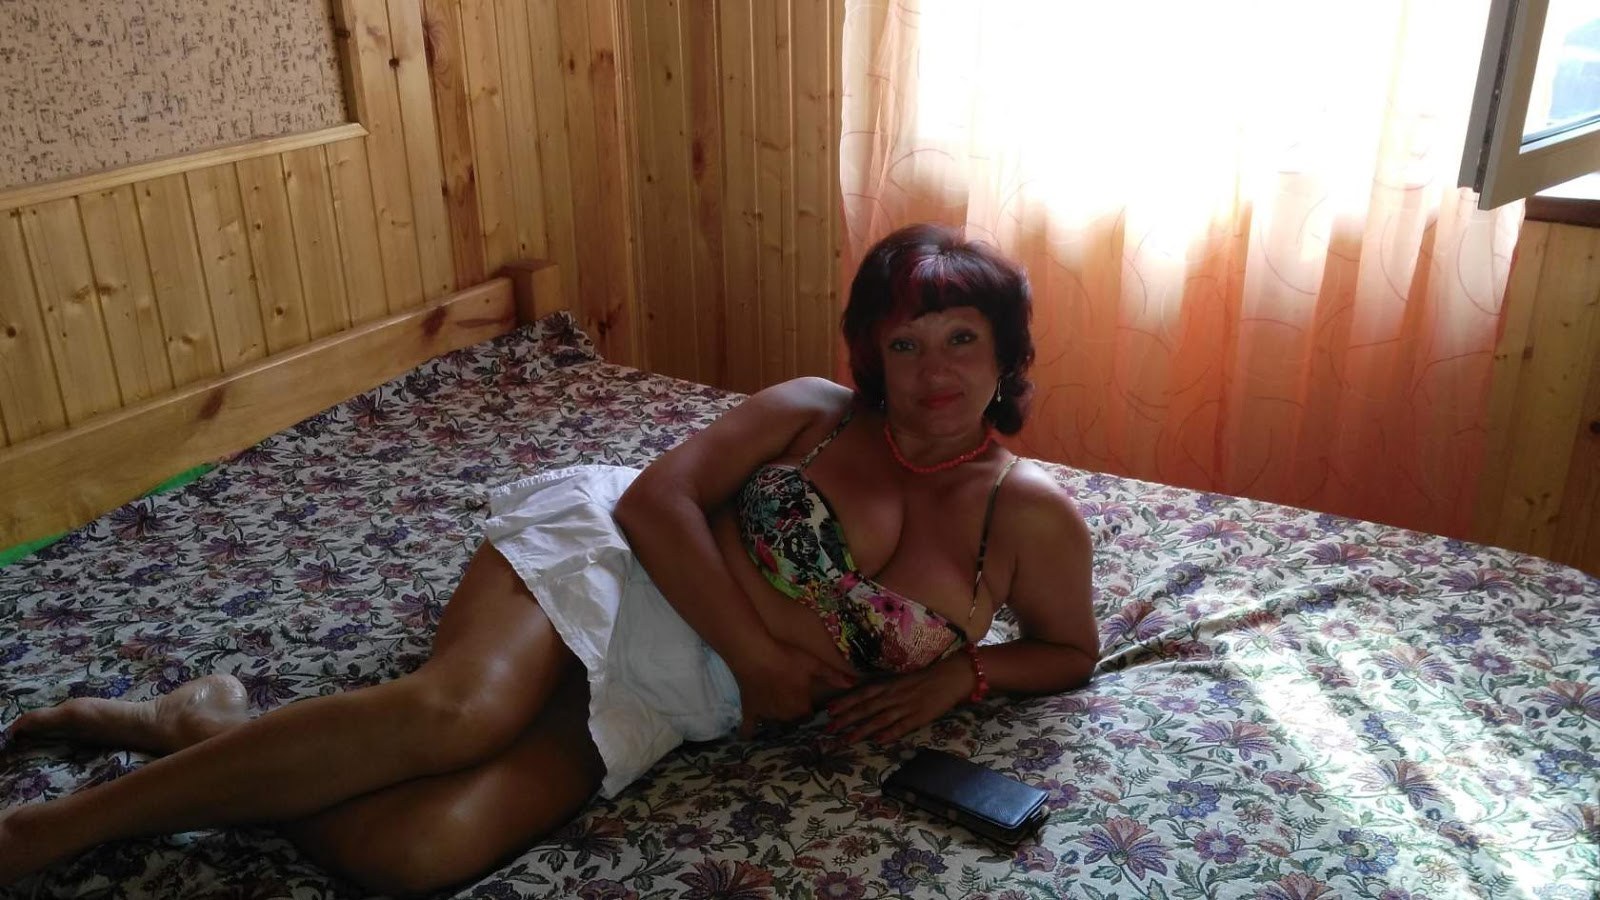 Людмила колесникова эротика (69 фото) - порно и эротика HuivPizde.com